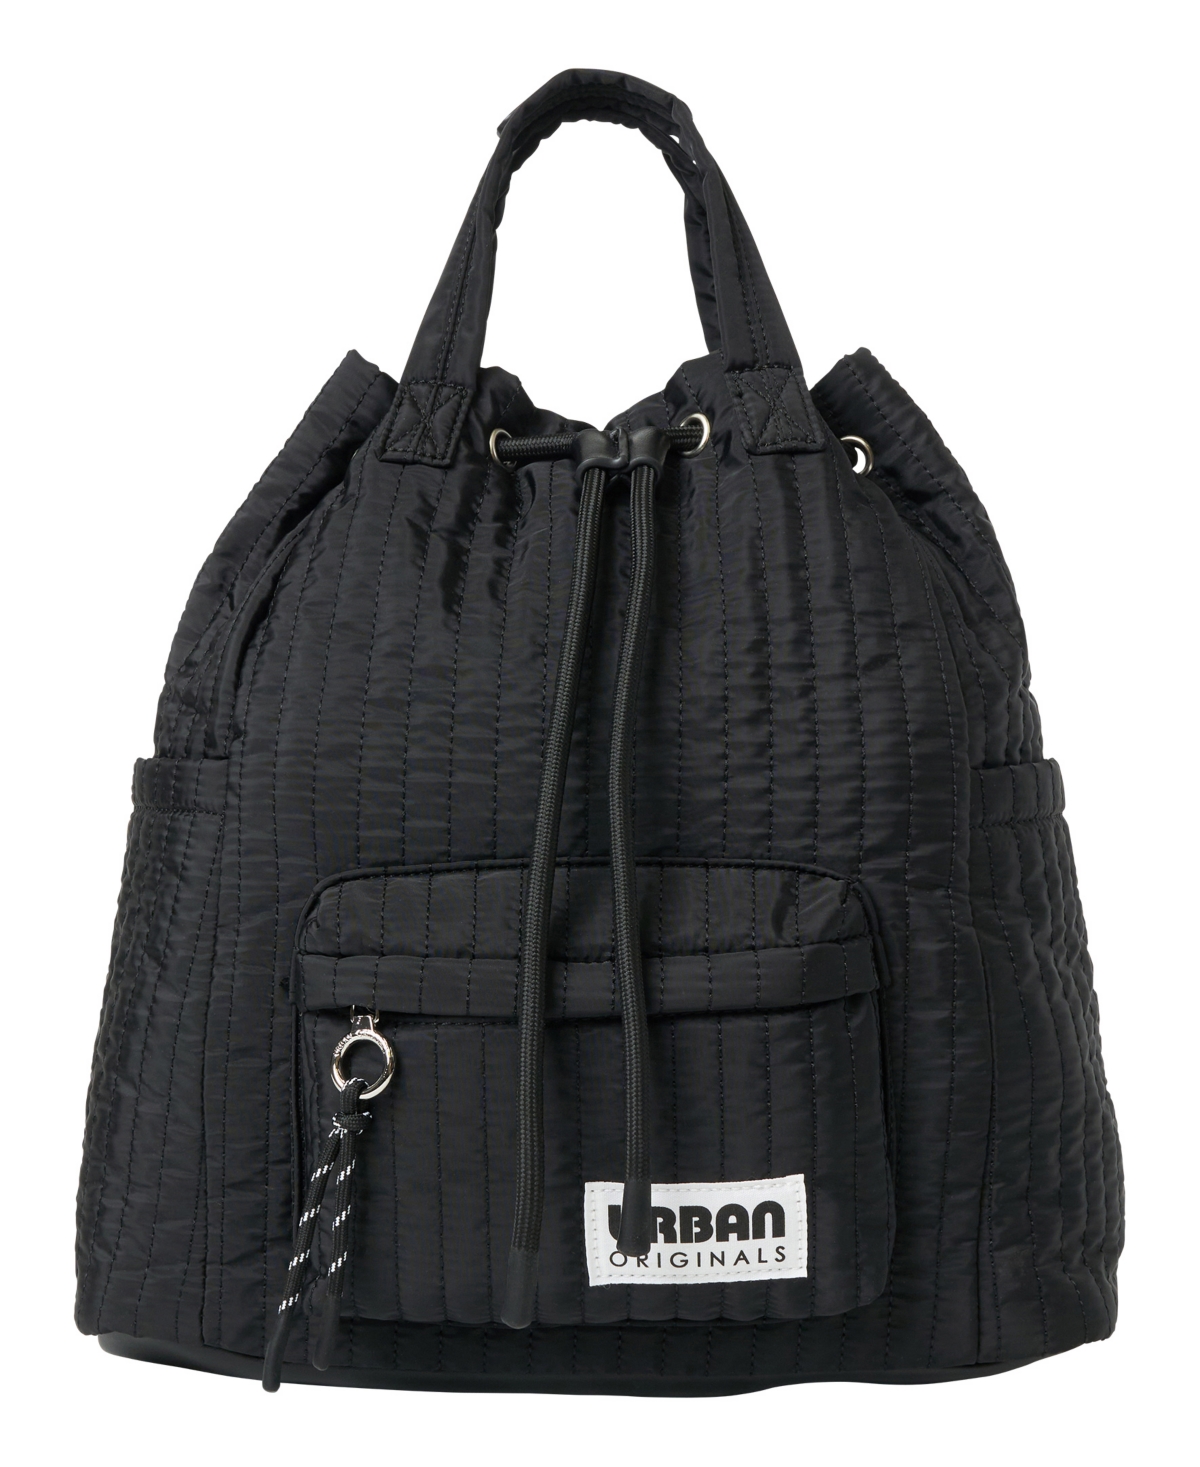 Urban Originals Soulmate Medium Backpack In Black